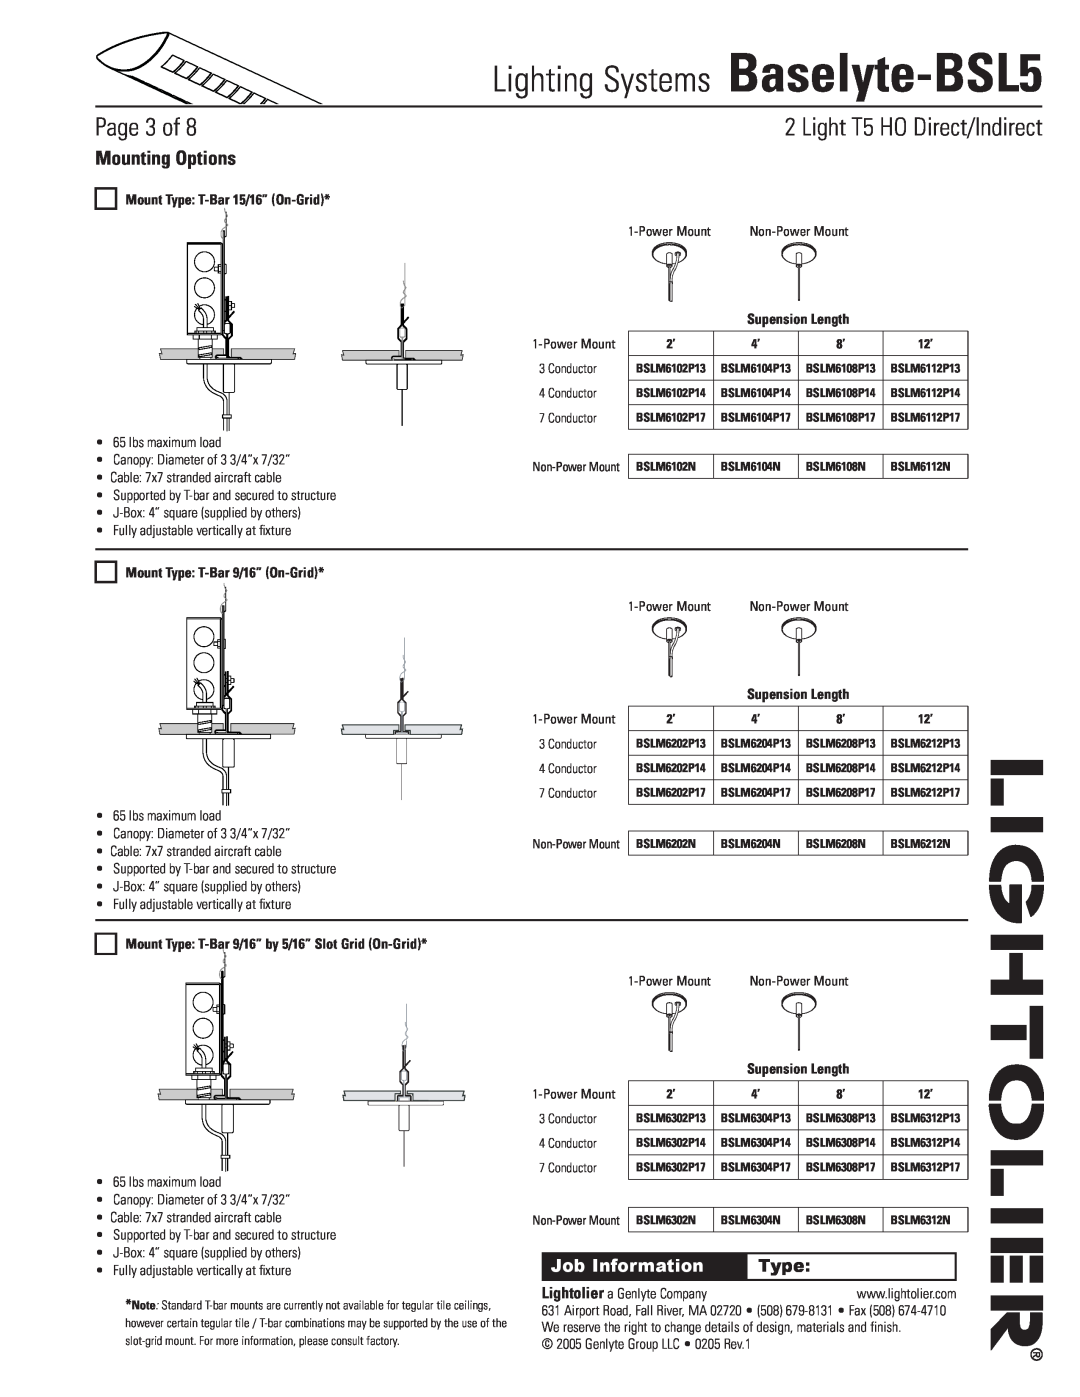 Lightolier Baselyte-BSL5 Mounting Options, Mount Type T-Bar15/16” On-Grid, Supension Length, Mount Type T-Bar9/16” On-Grid 